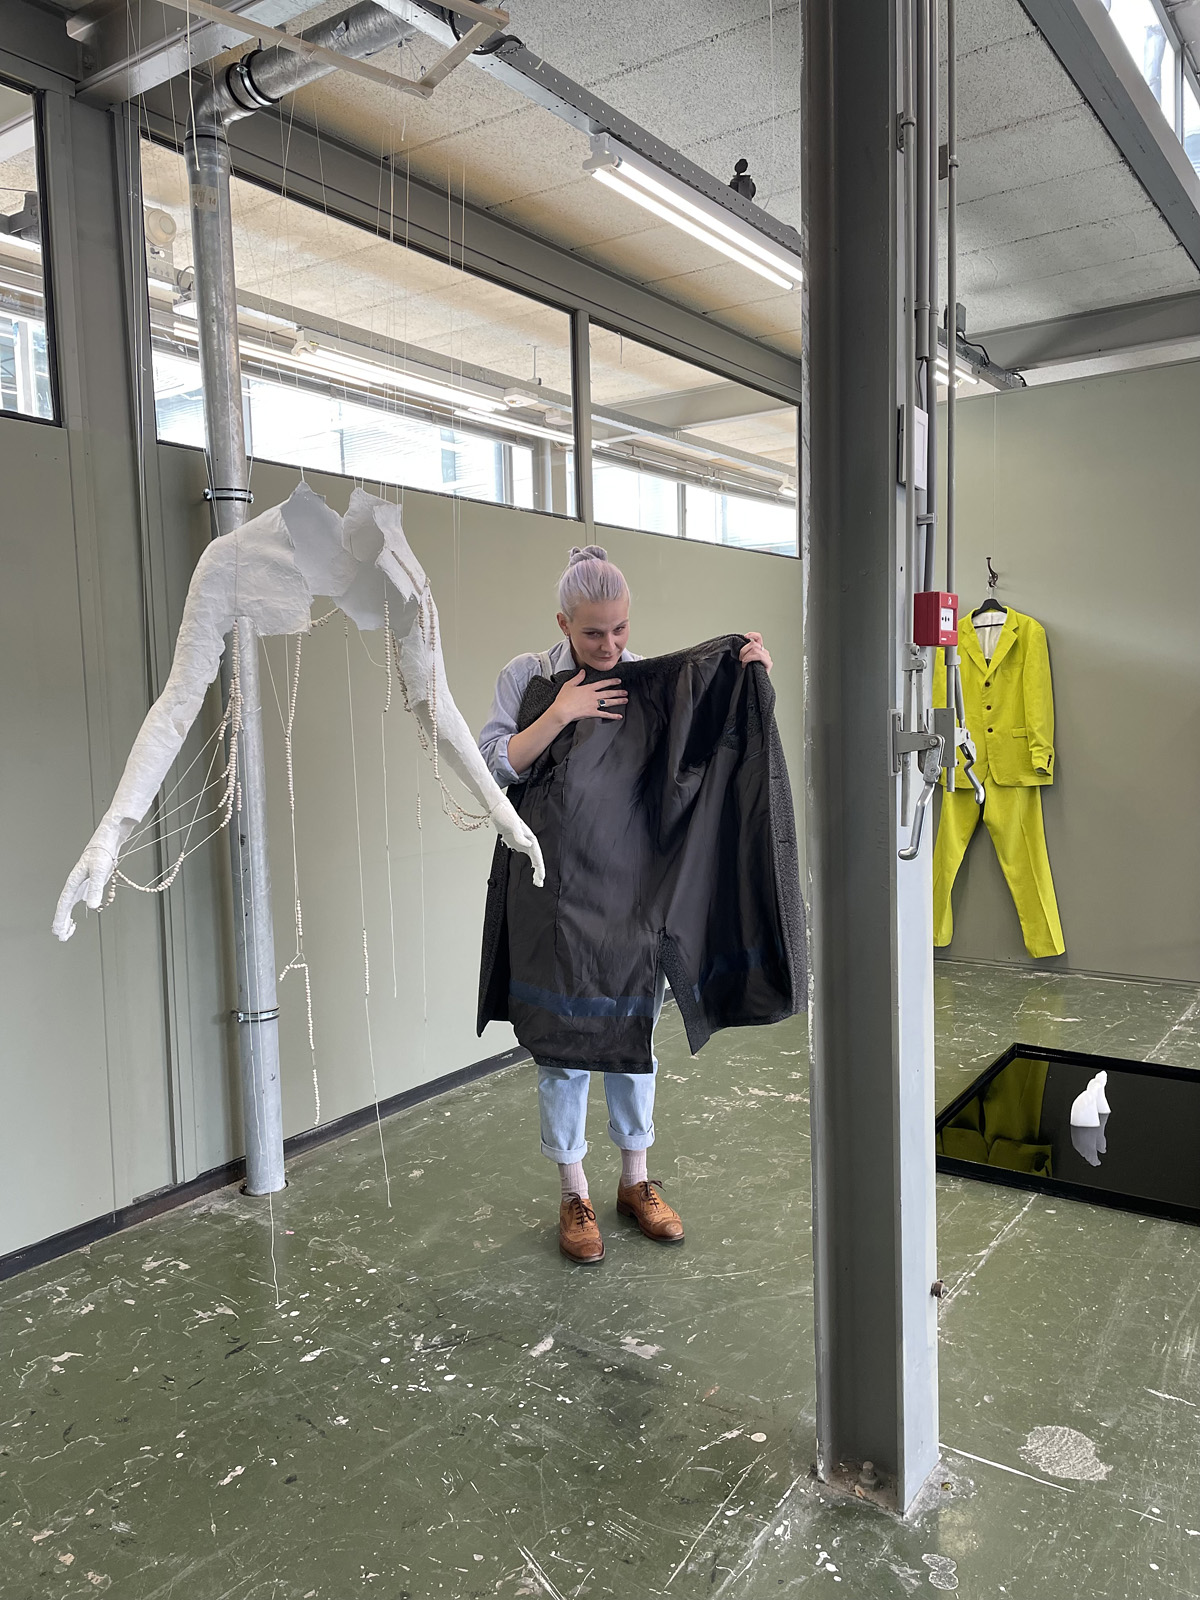 Eindexamen Gerrit Rietveld Academie 2021